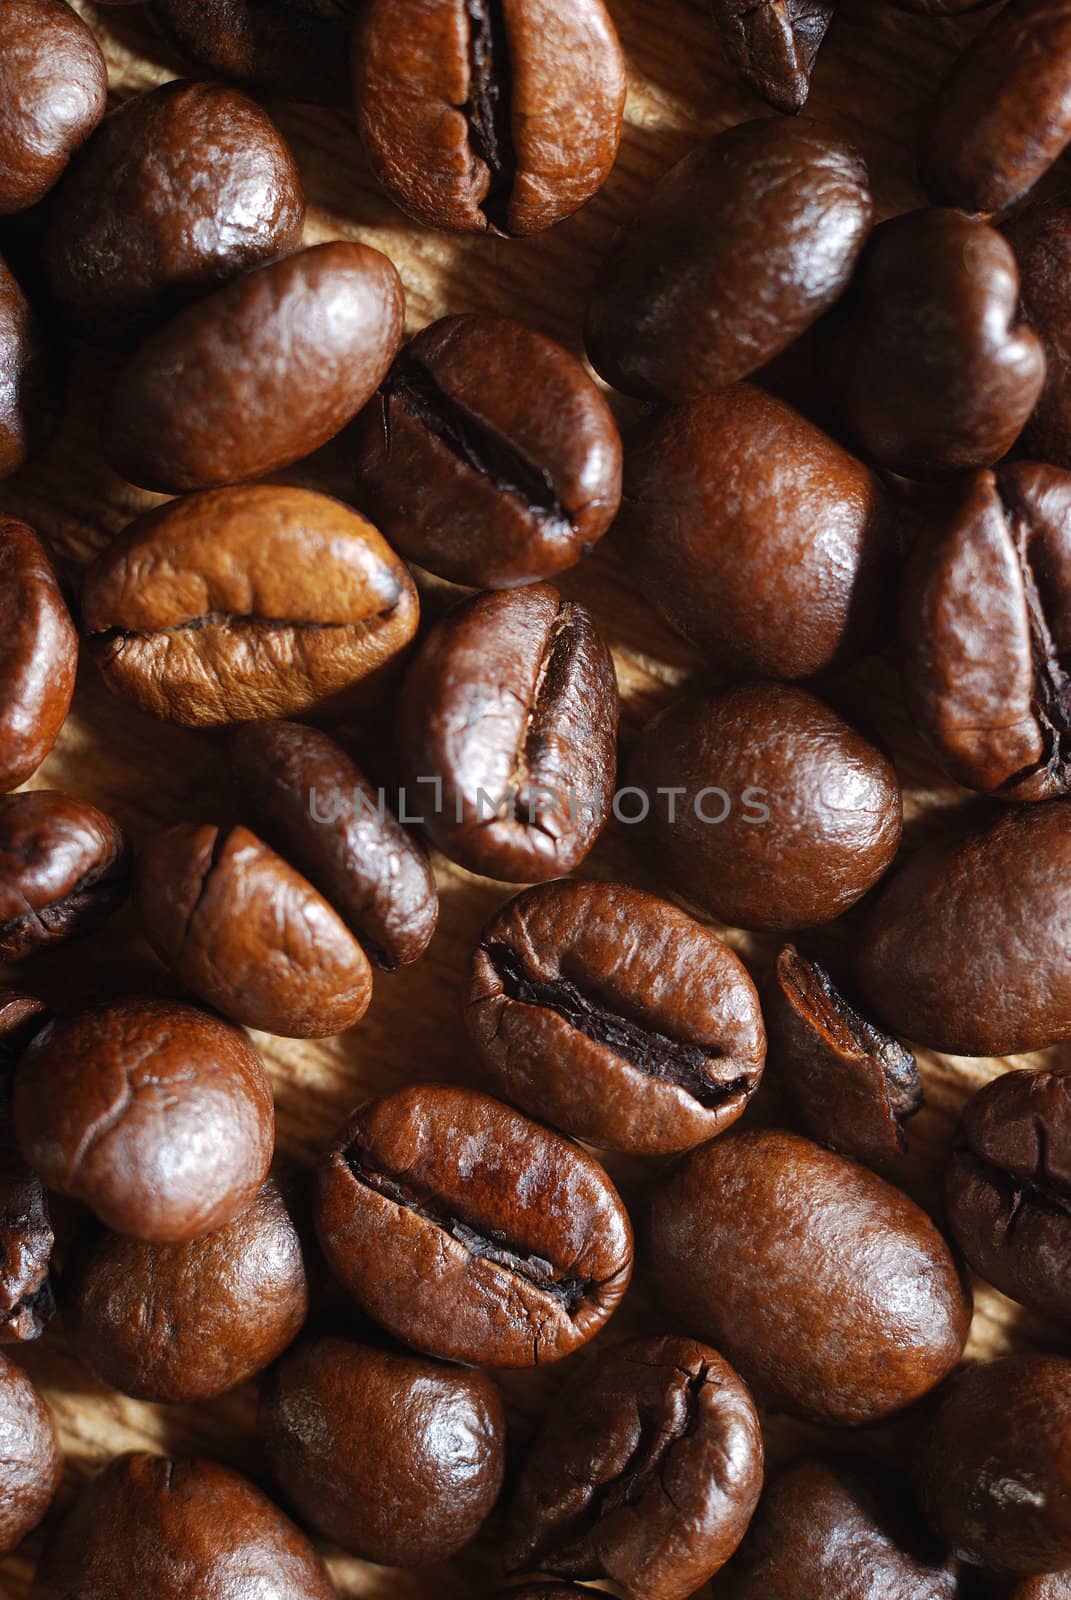 roasted brown  coffee beans. ingredient background